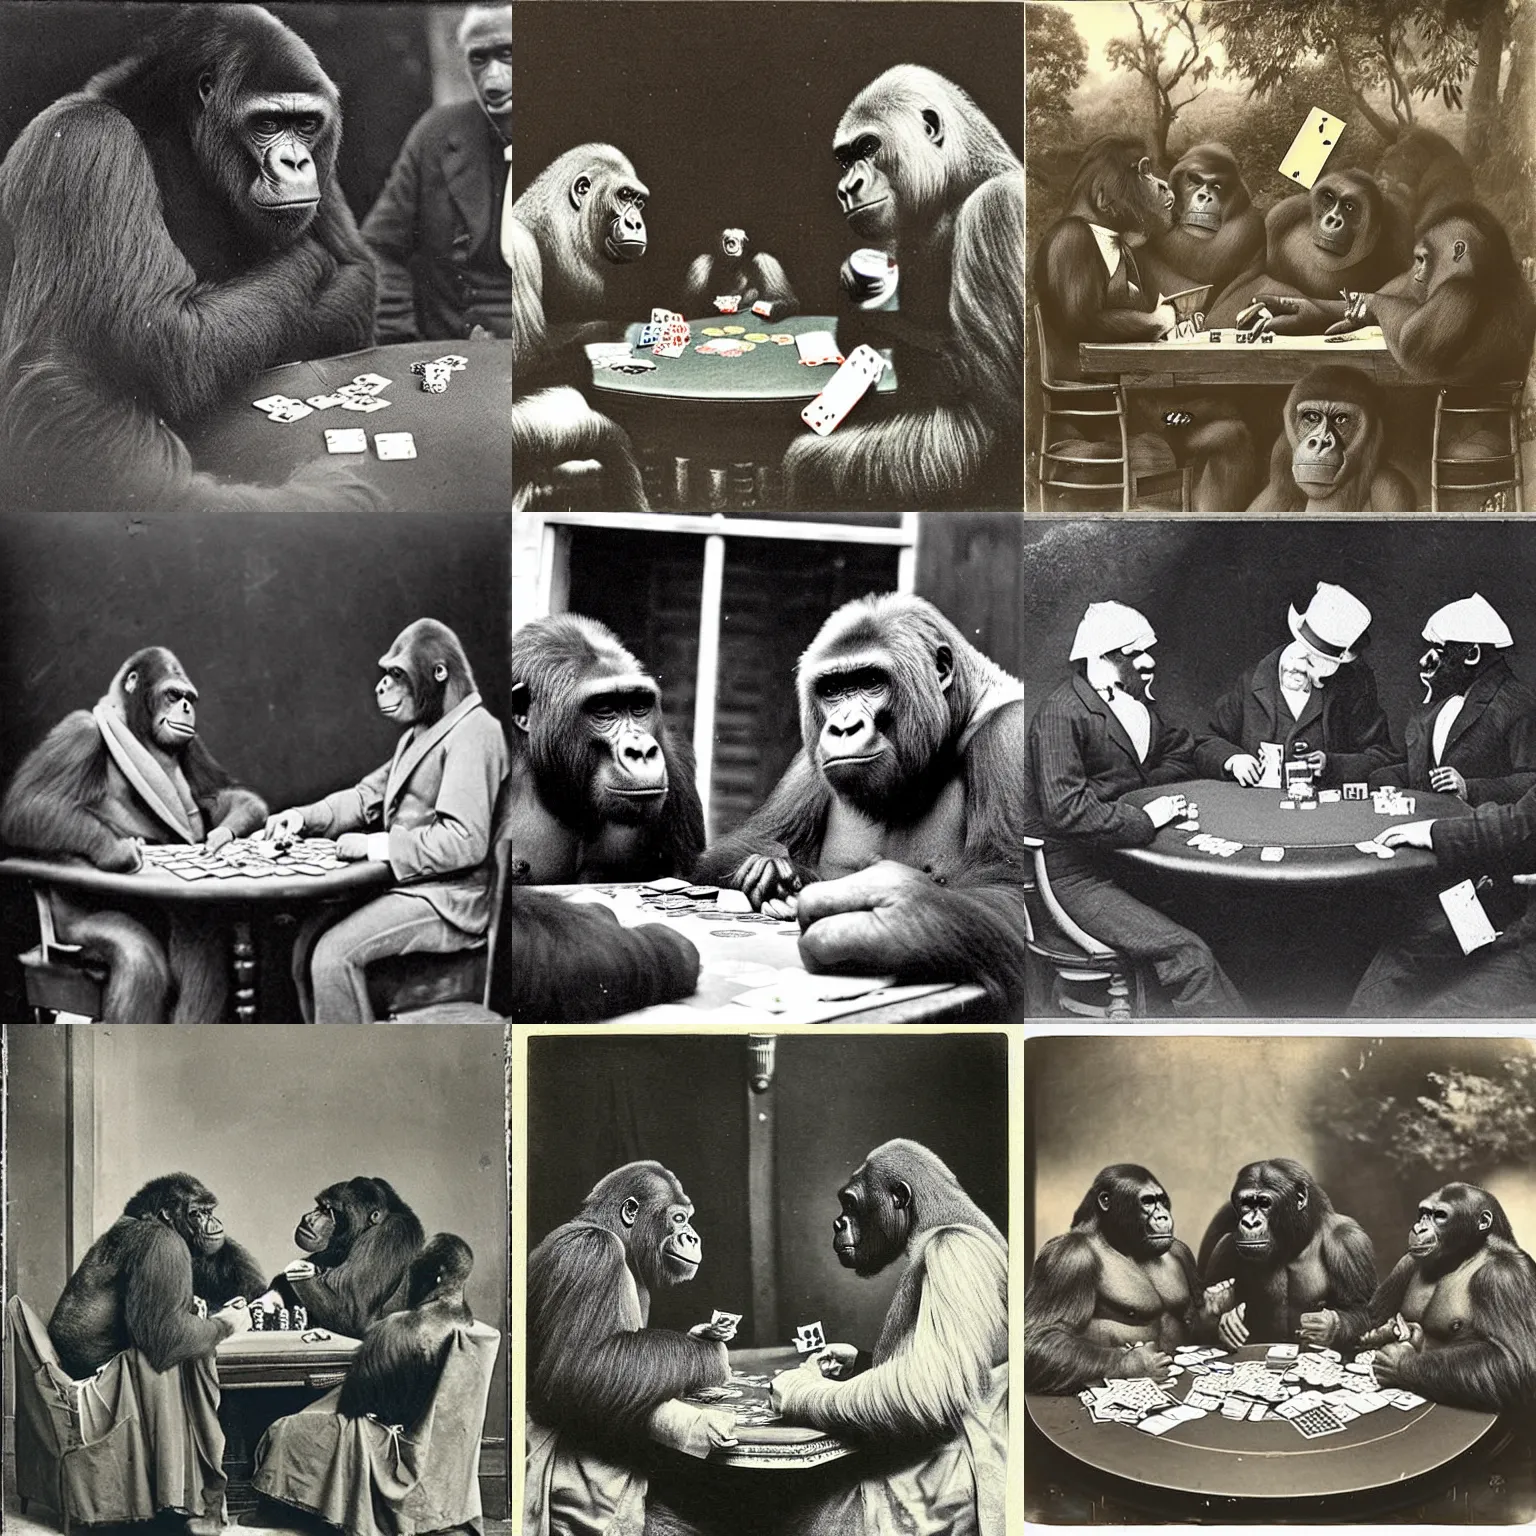 Prompt: “gorillas playing poker, 1900’s photo”